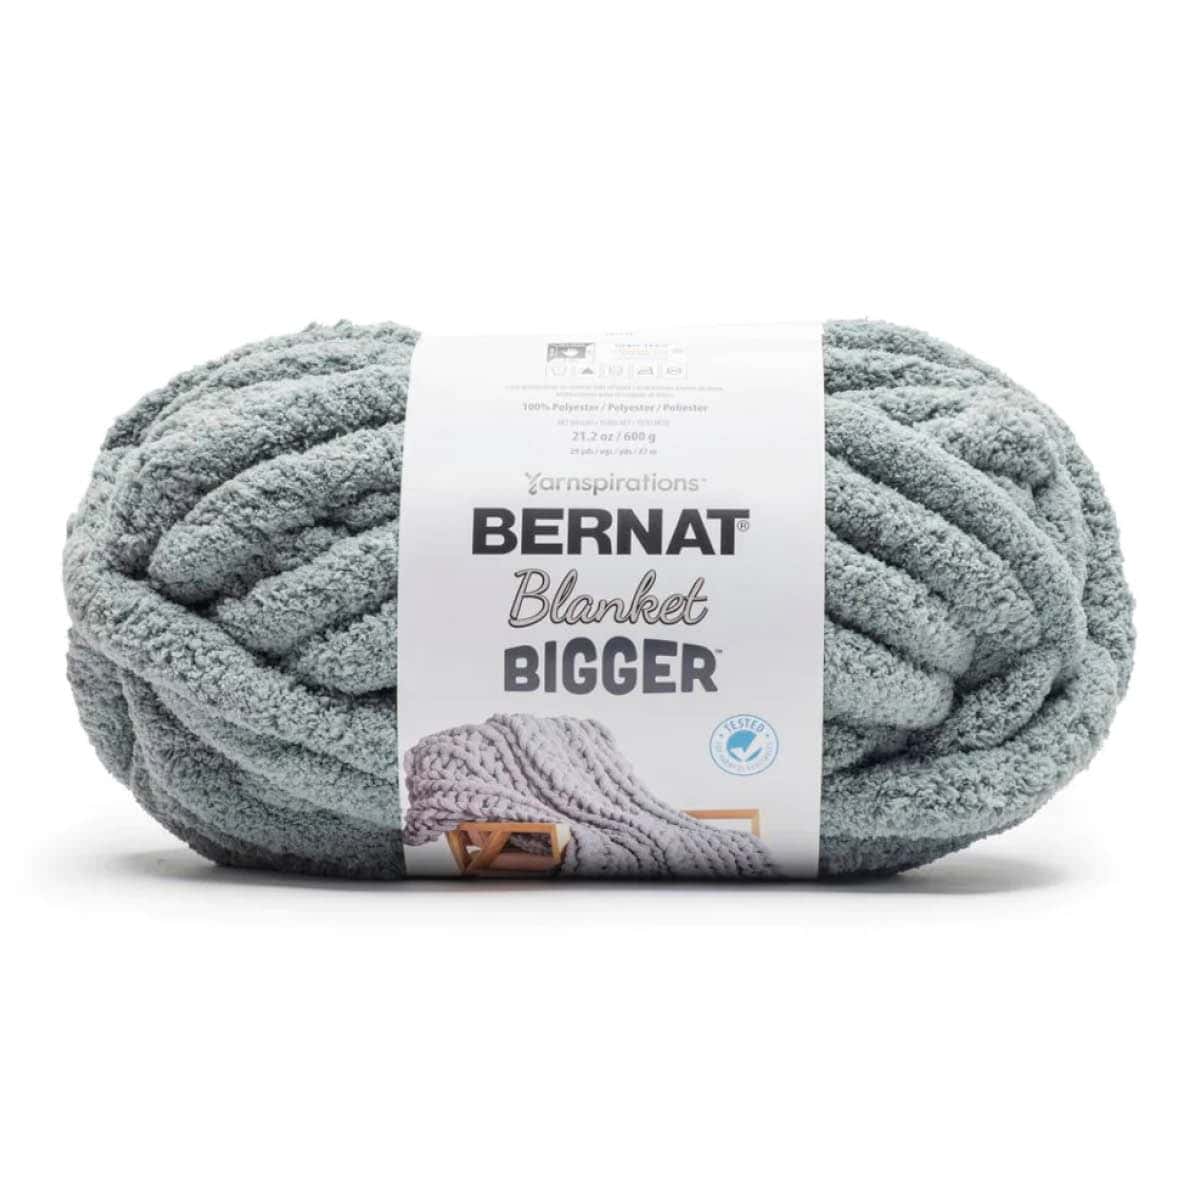 Bernat Blanket Bigger Yarn Product